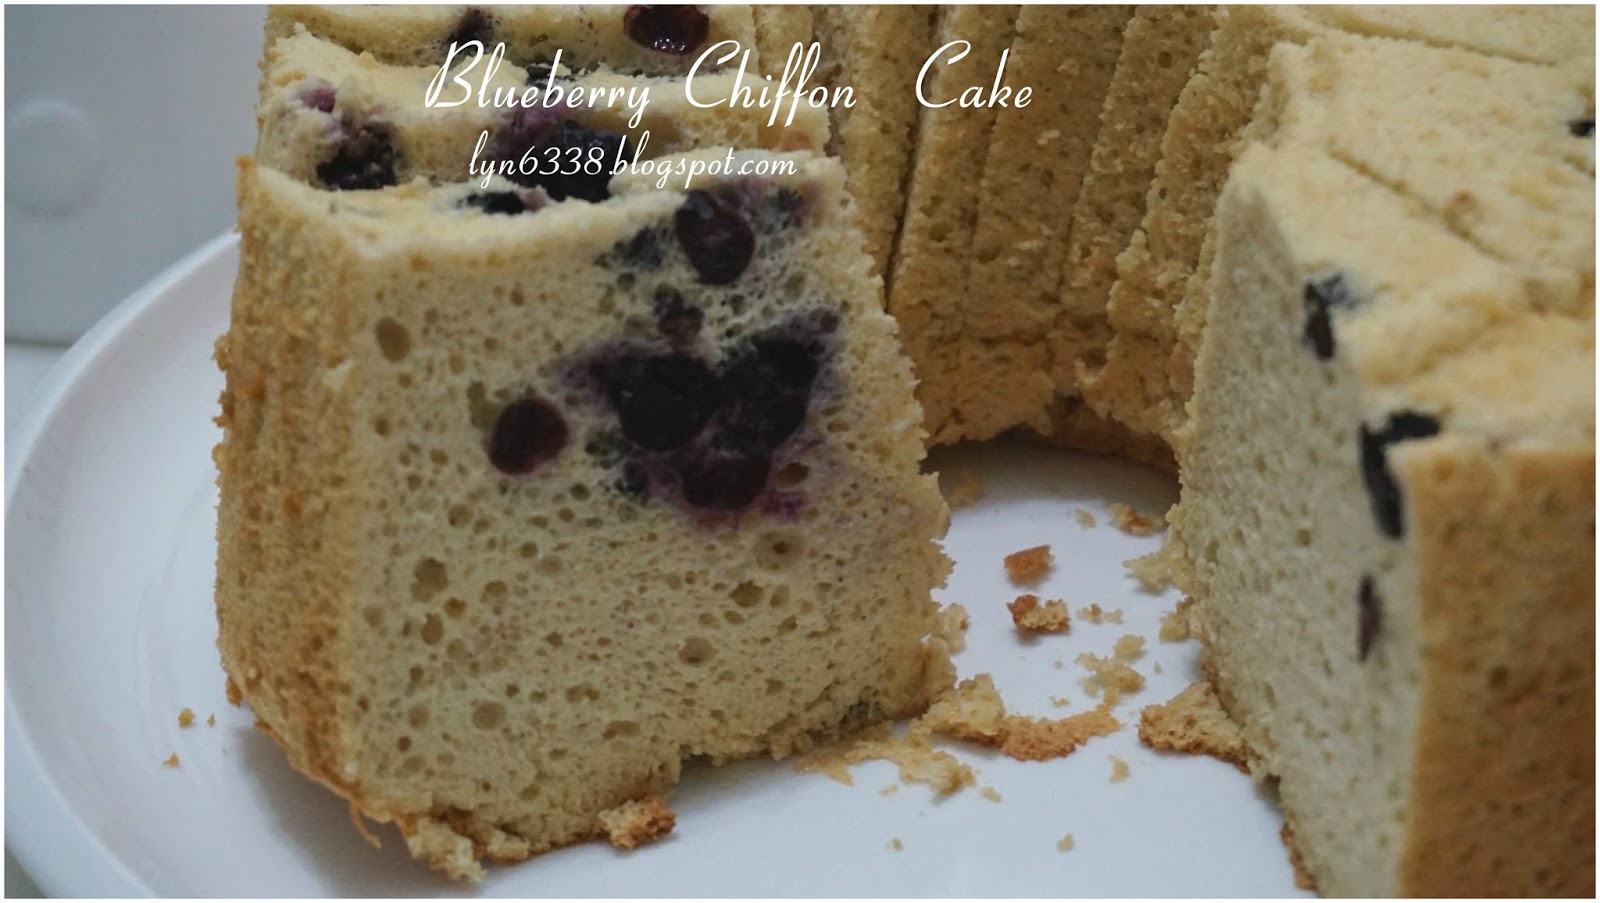 Grace's Blog 欣语心情: 蓝莓戚风蛋糕 Blueberry Chiffon Cake